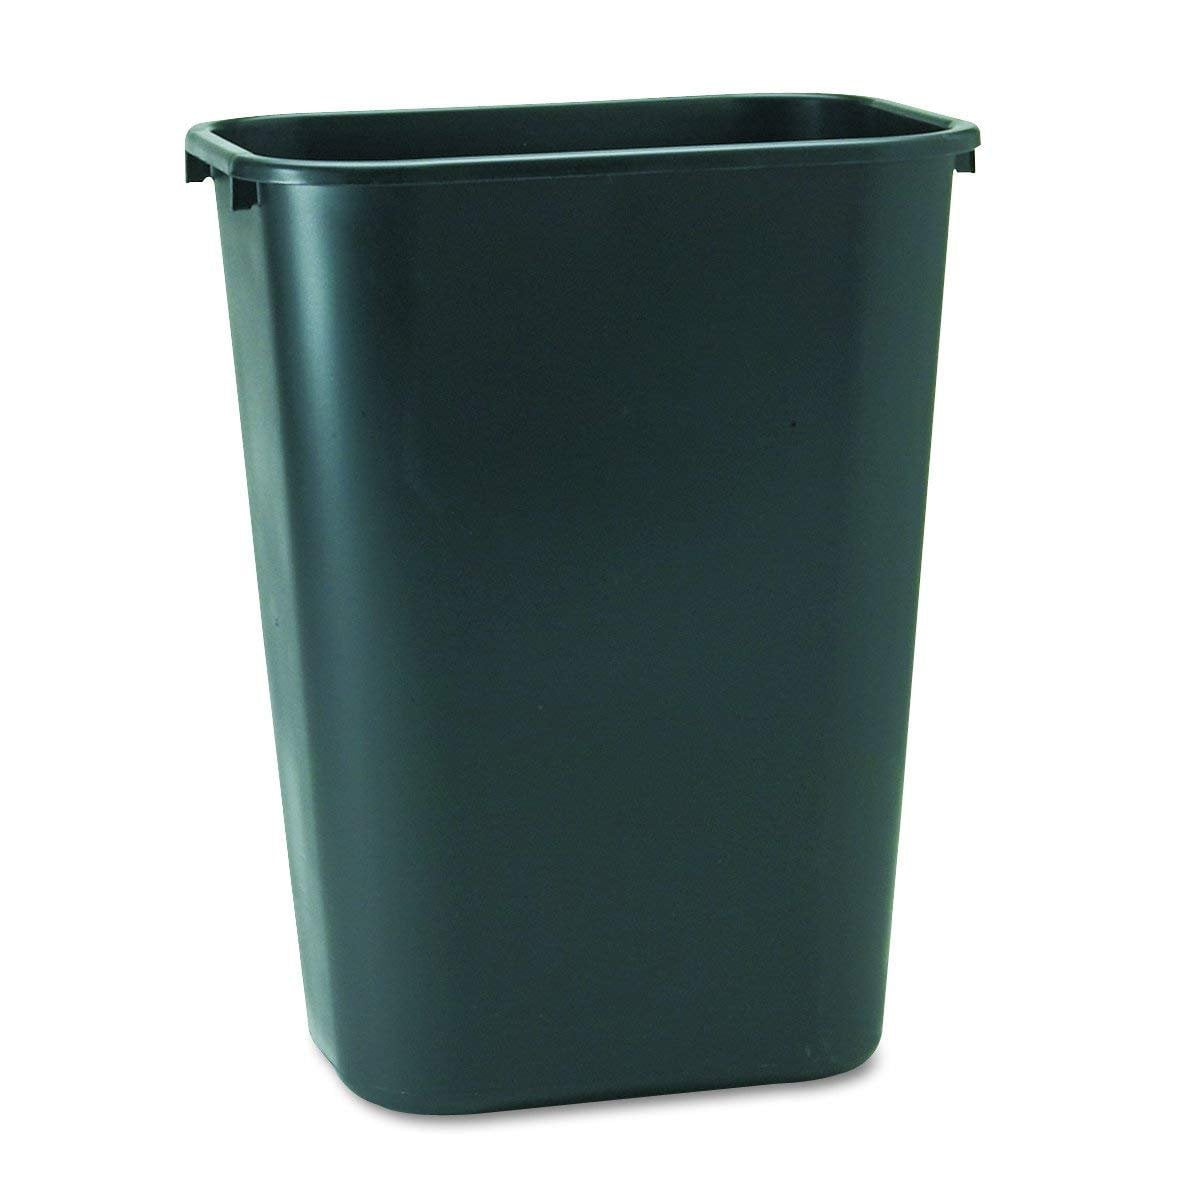 Rubbermaid Commercial Deskside Plastic Wastebasket, Gray - 10 gal